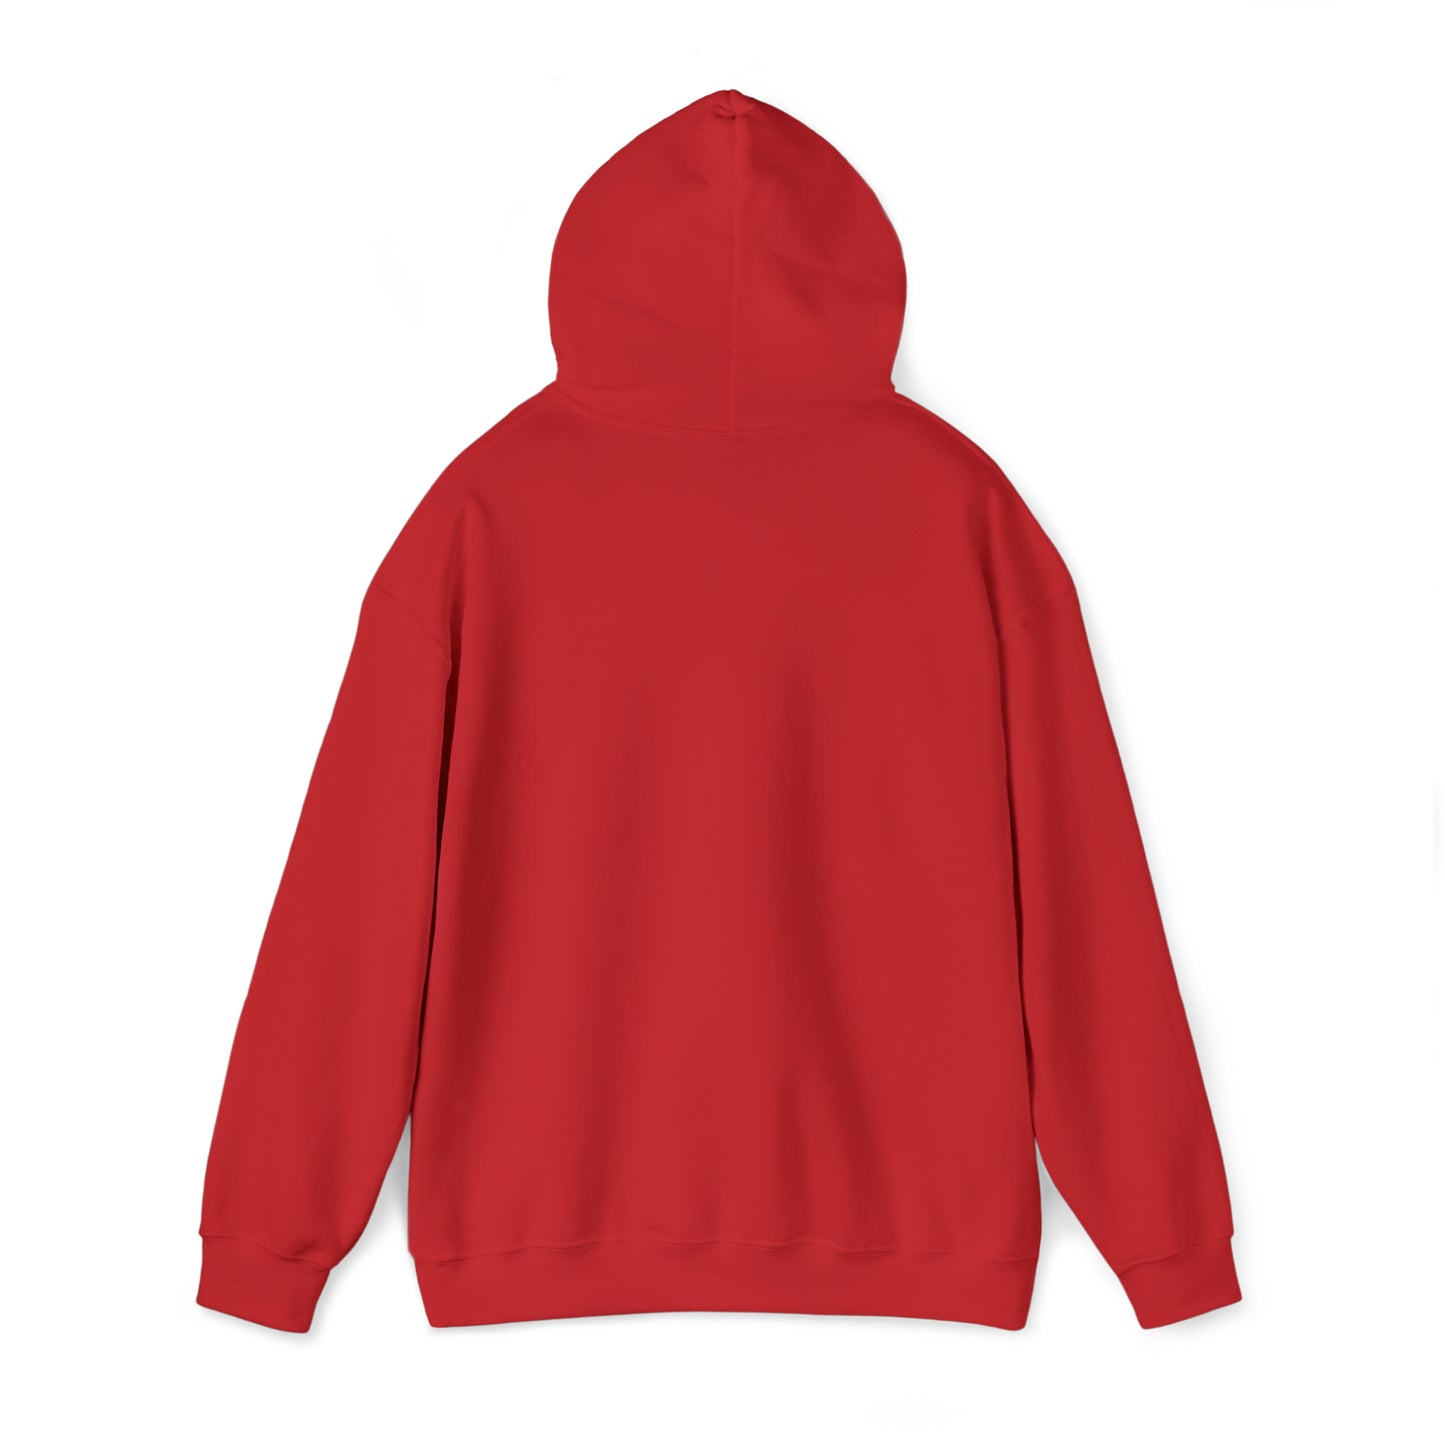 Woman of God Unisex Heavy Blend™ Hooded Sweatshirt